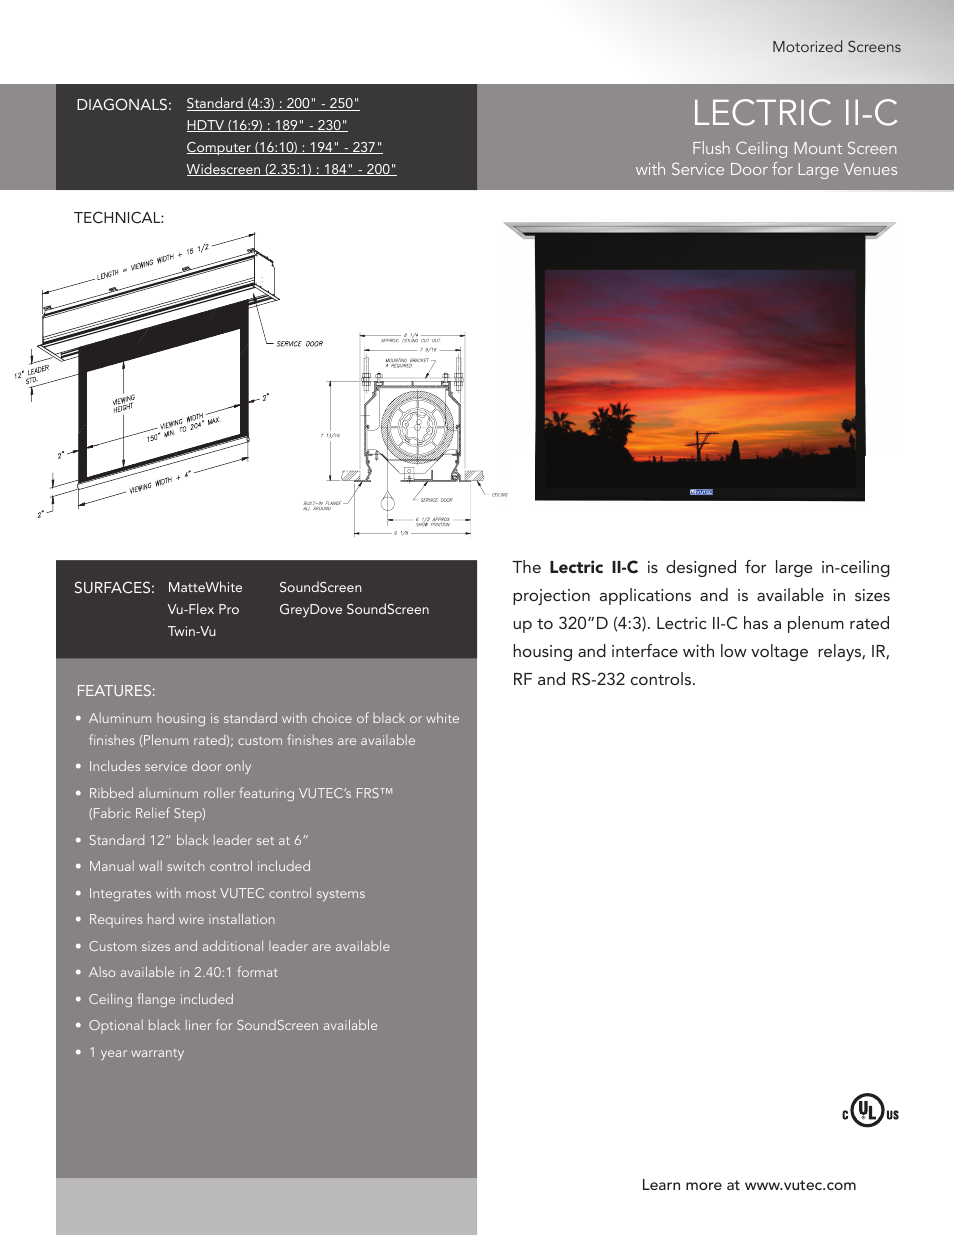 LECTRIC II-C - Product Sheet